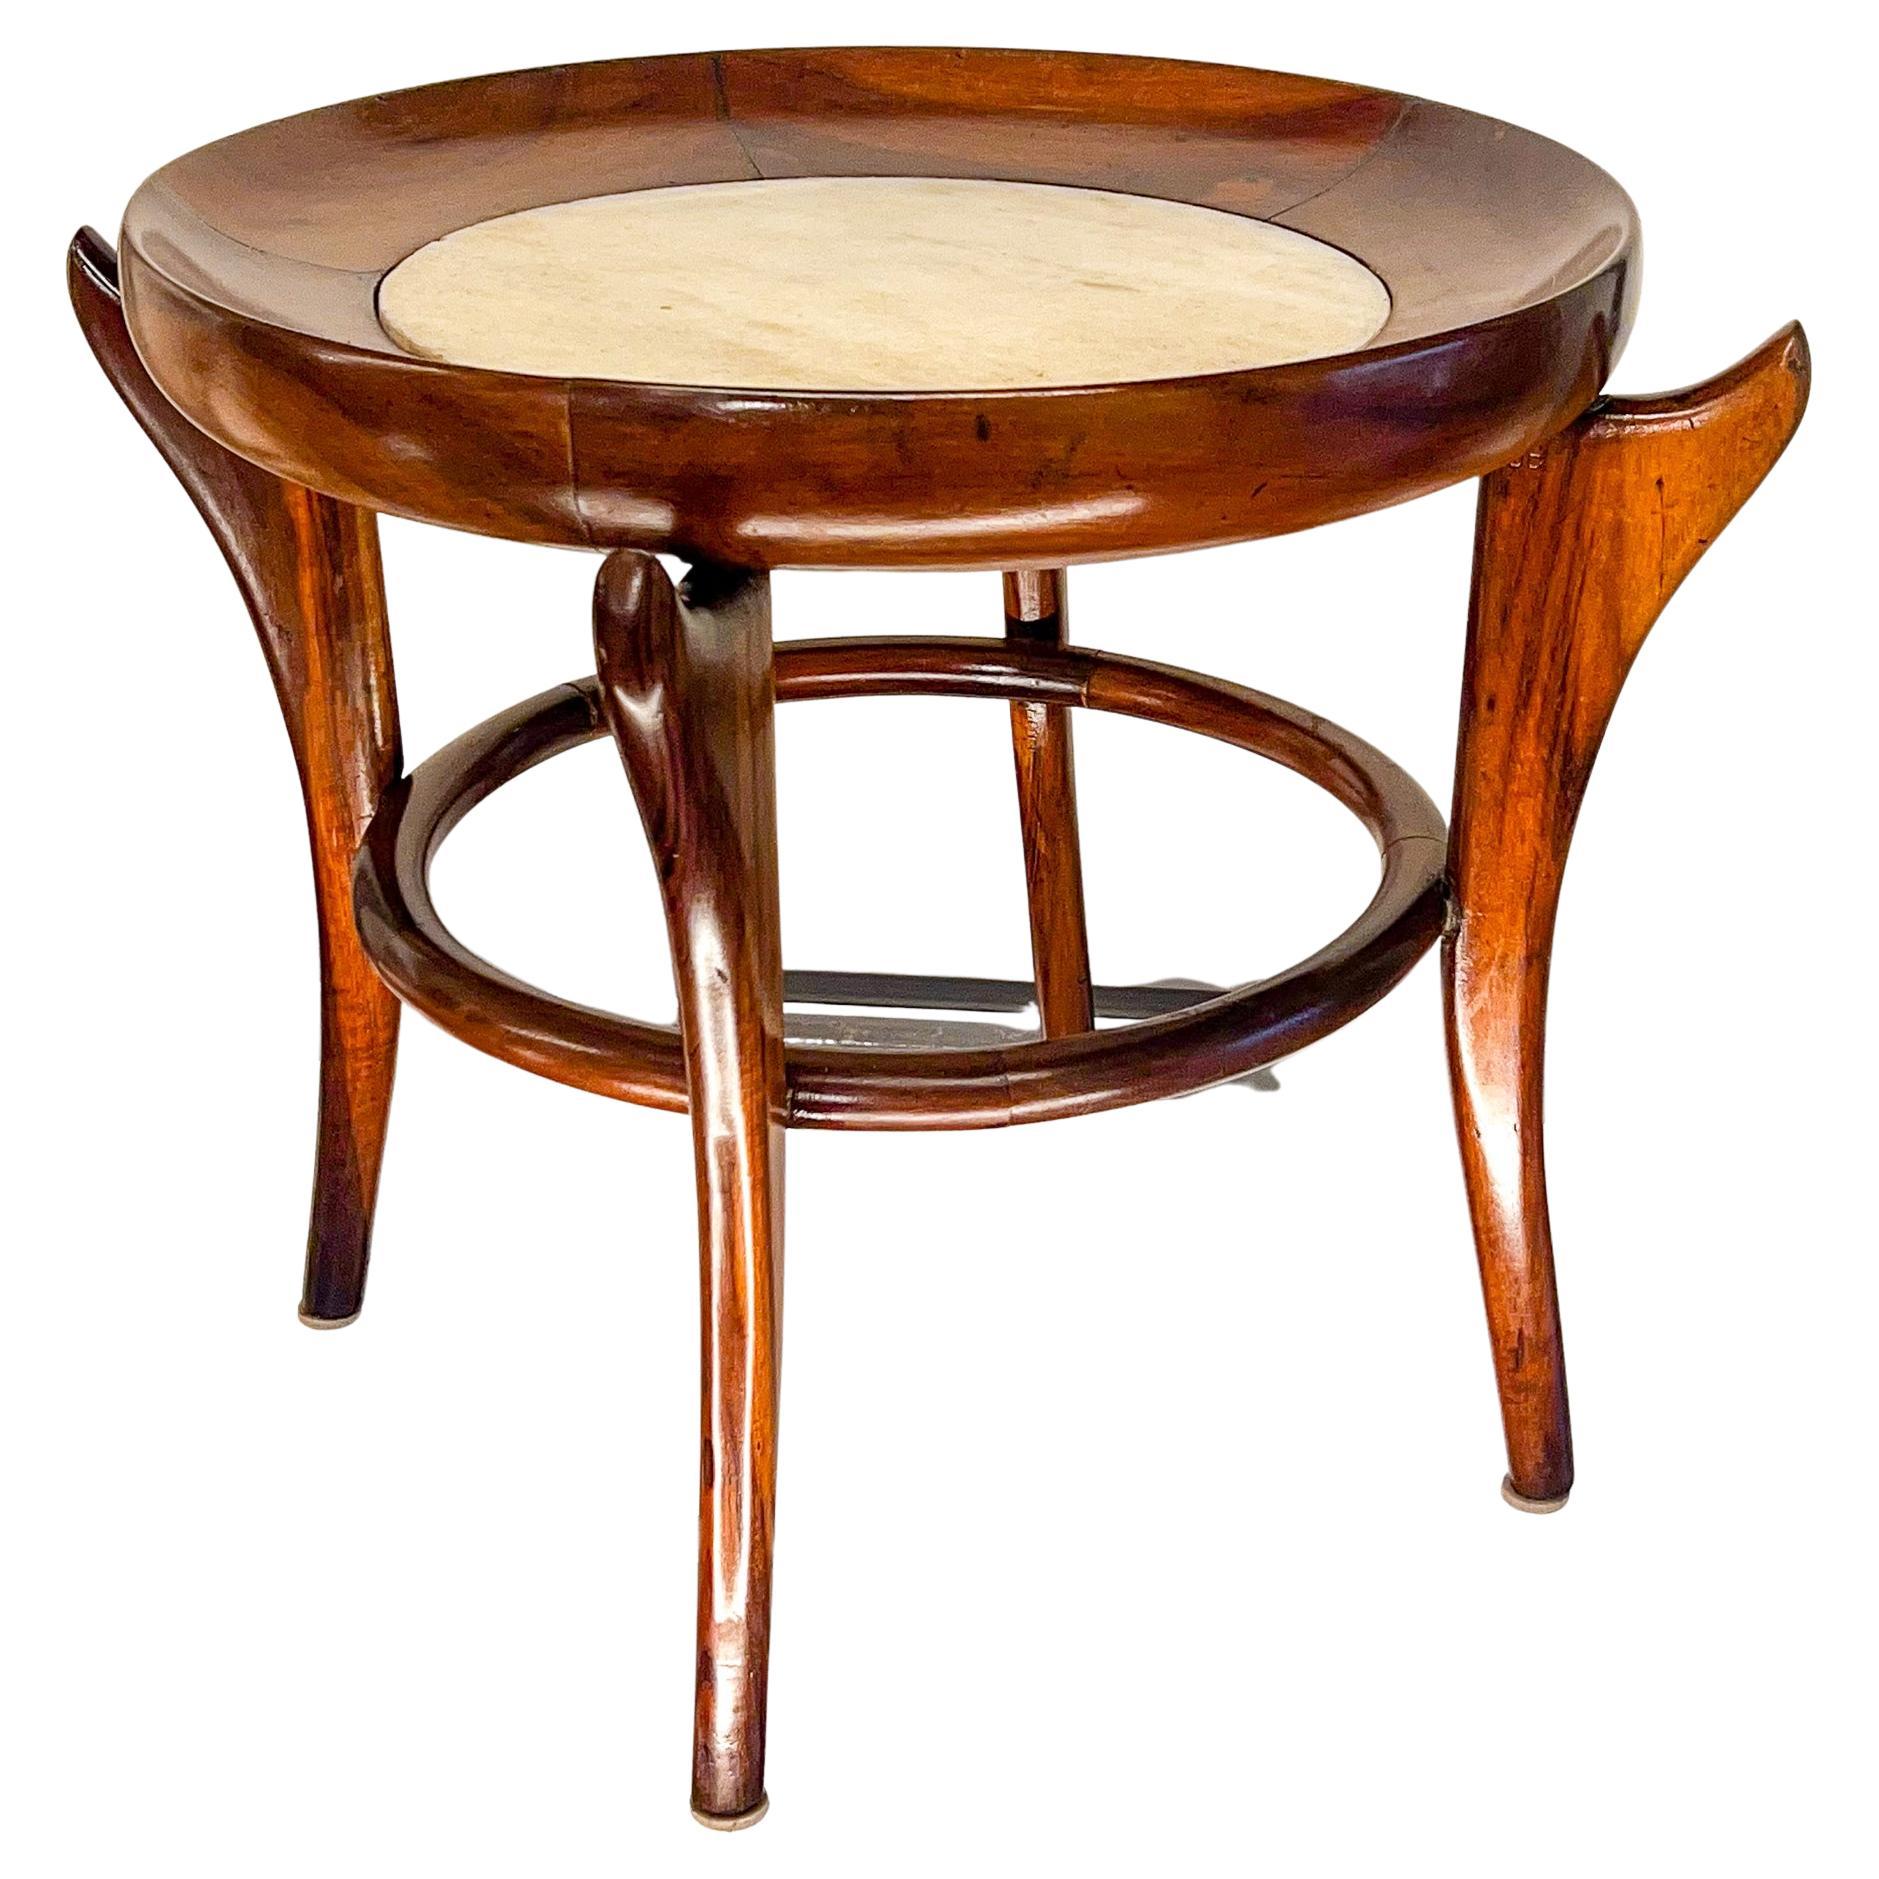 Brazilian Modern Side Table in Hardwood & Marble by Giuseppe Scapinelli, Brazil